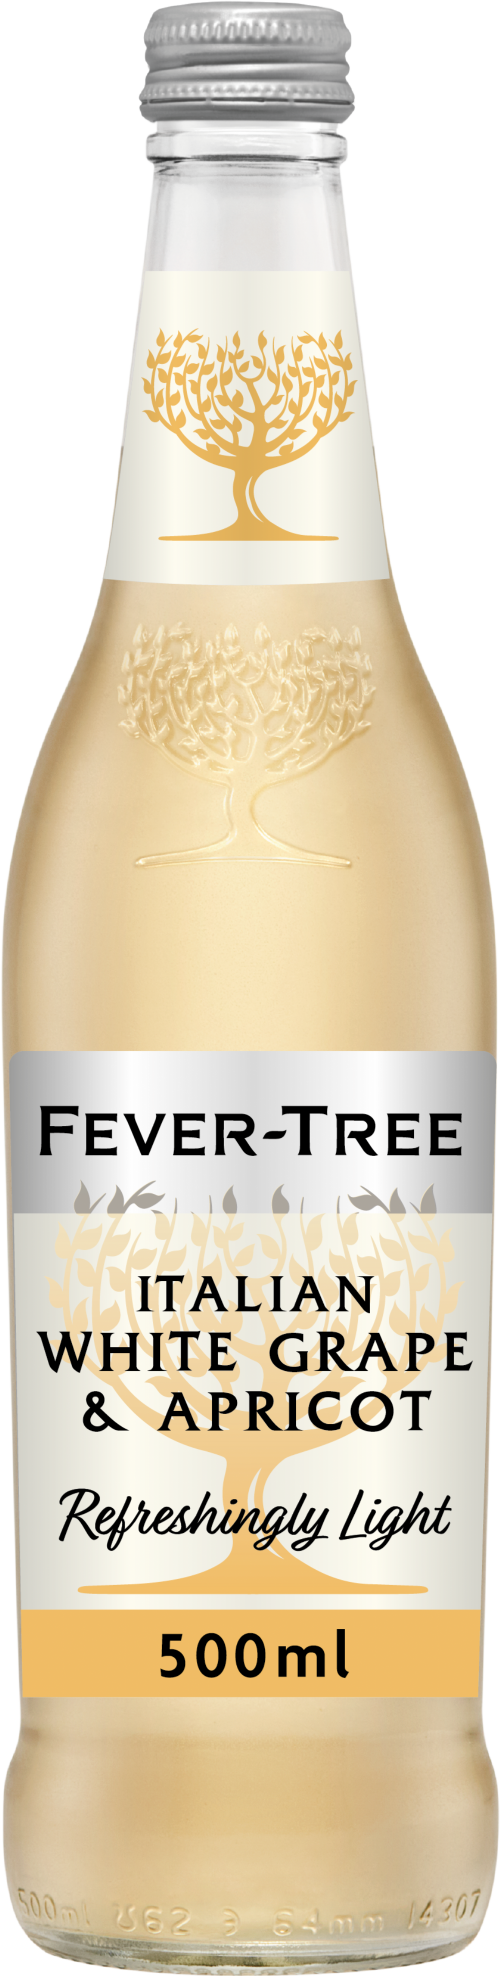 FEVER-TREE Refreshingly Light White Grape & Apricot 500ml